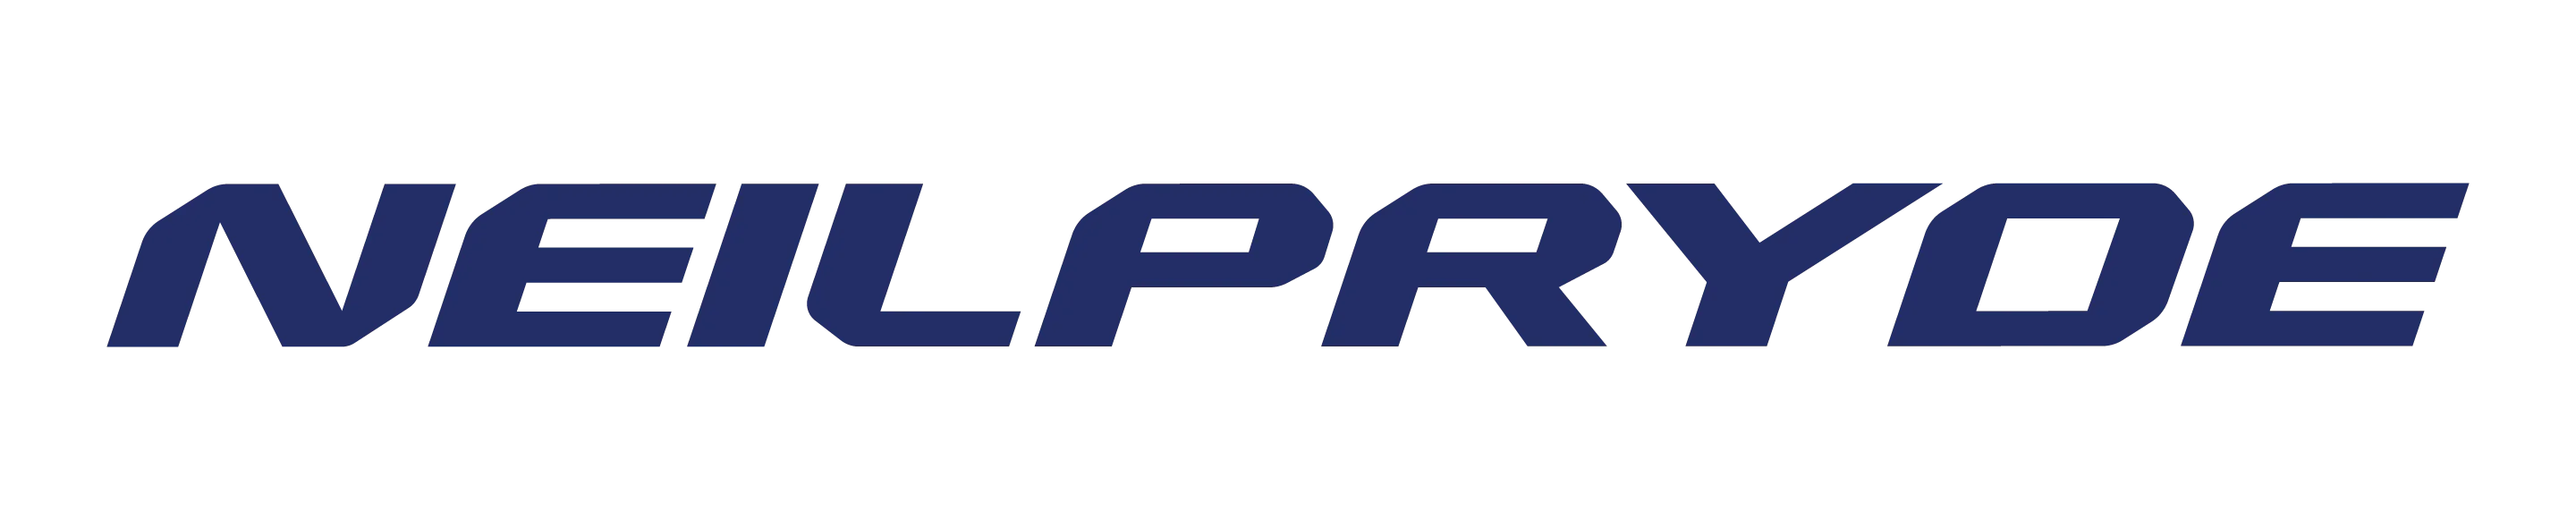 Neil Pryde logo